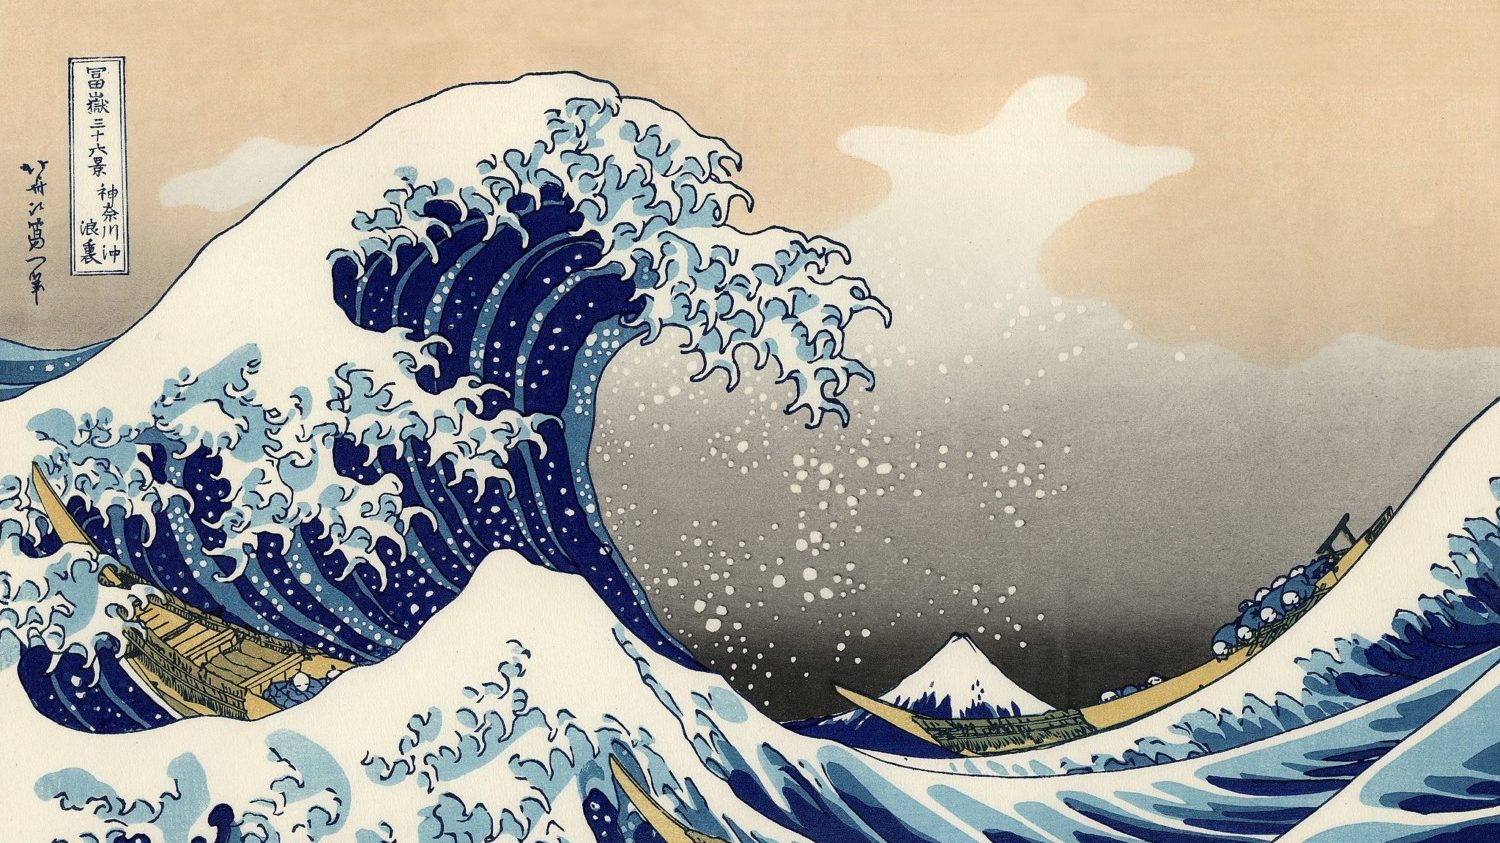 Hokusai's The Great Wave off Kanagawa painting